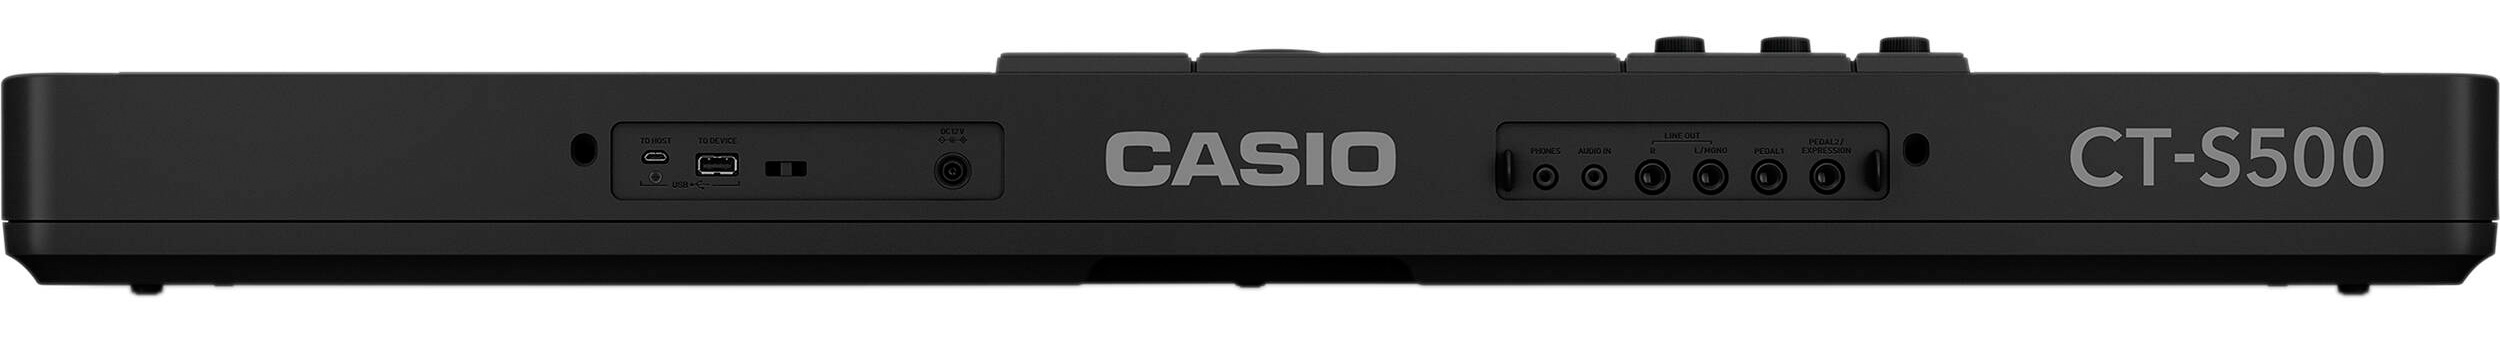 Casio CT-S500 по цене 39 000 ₽